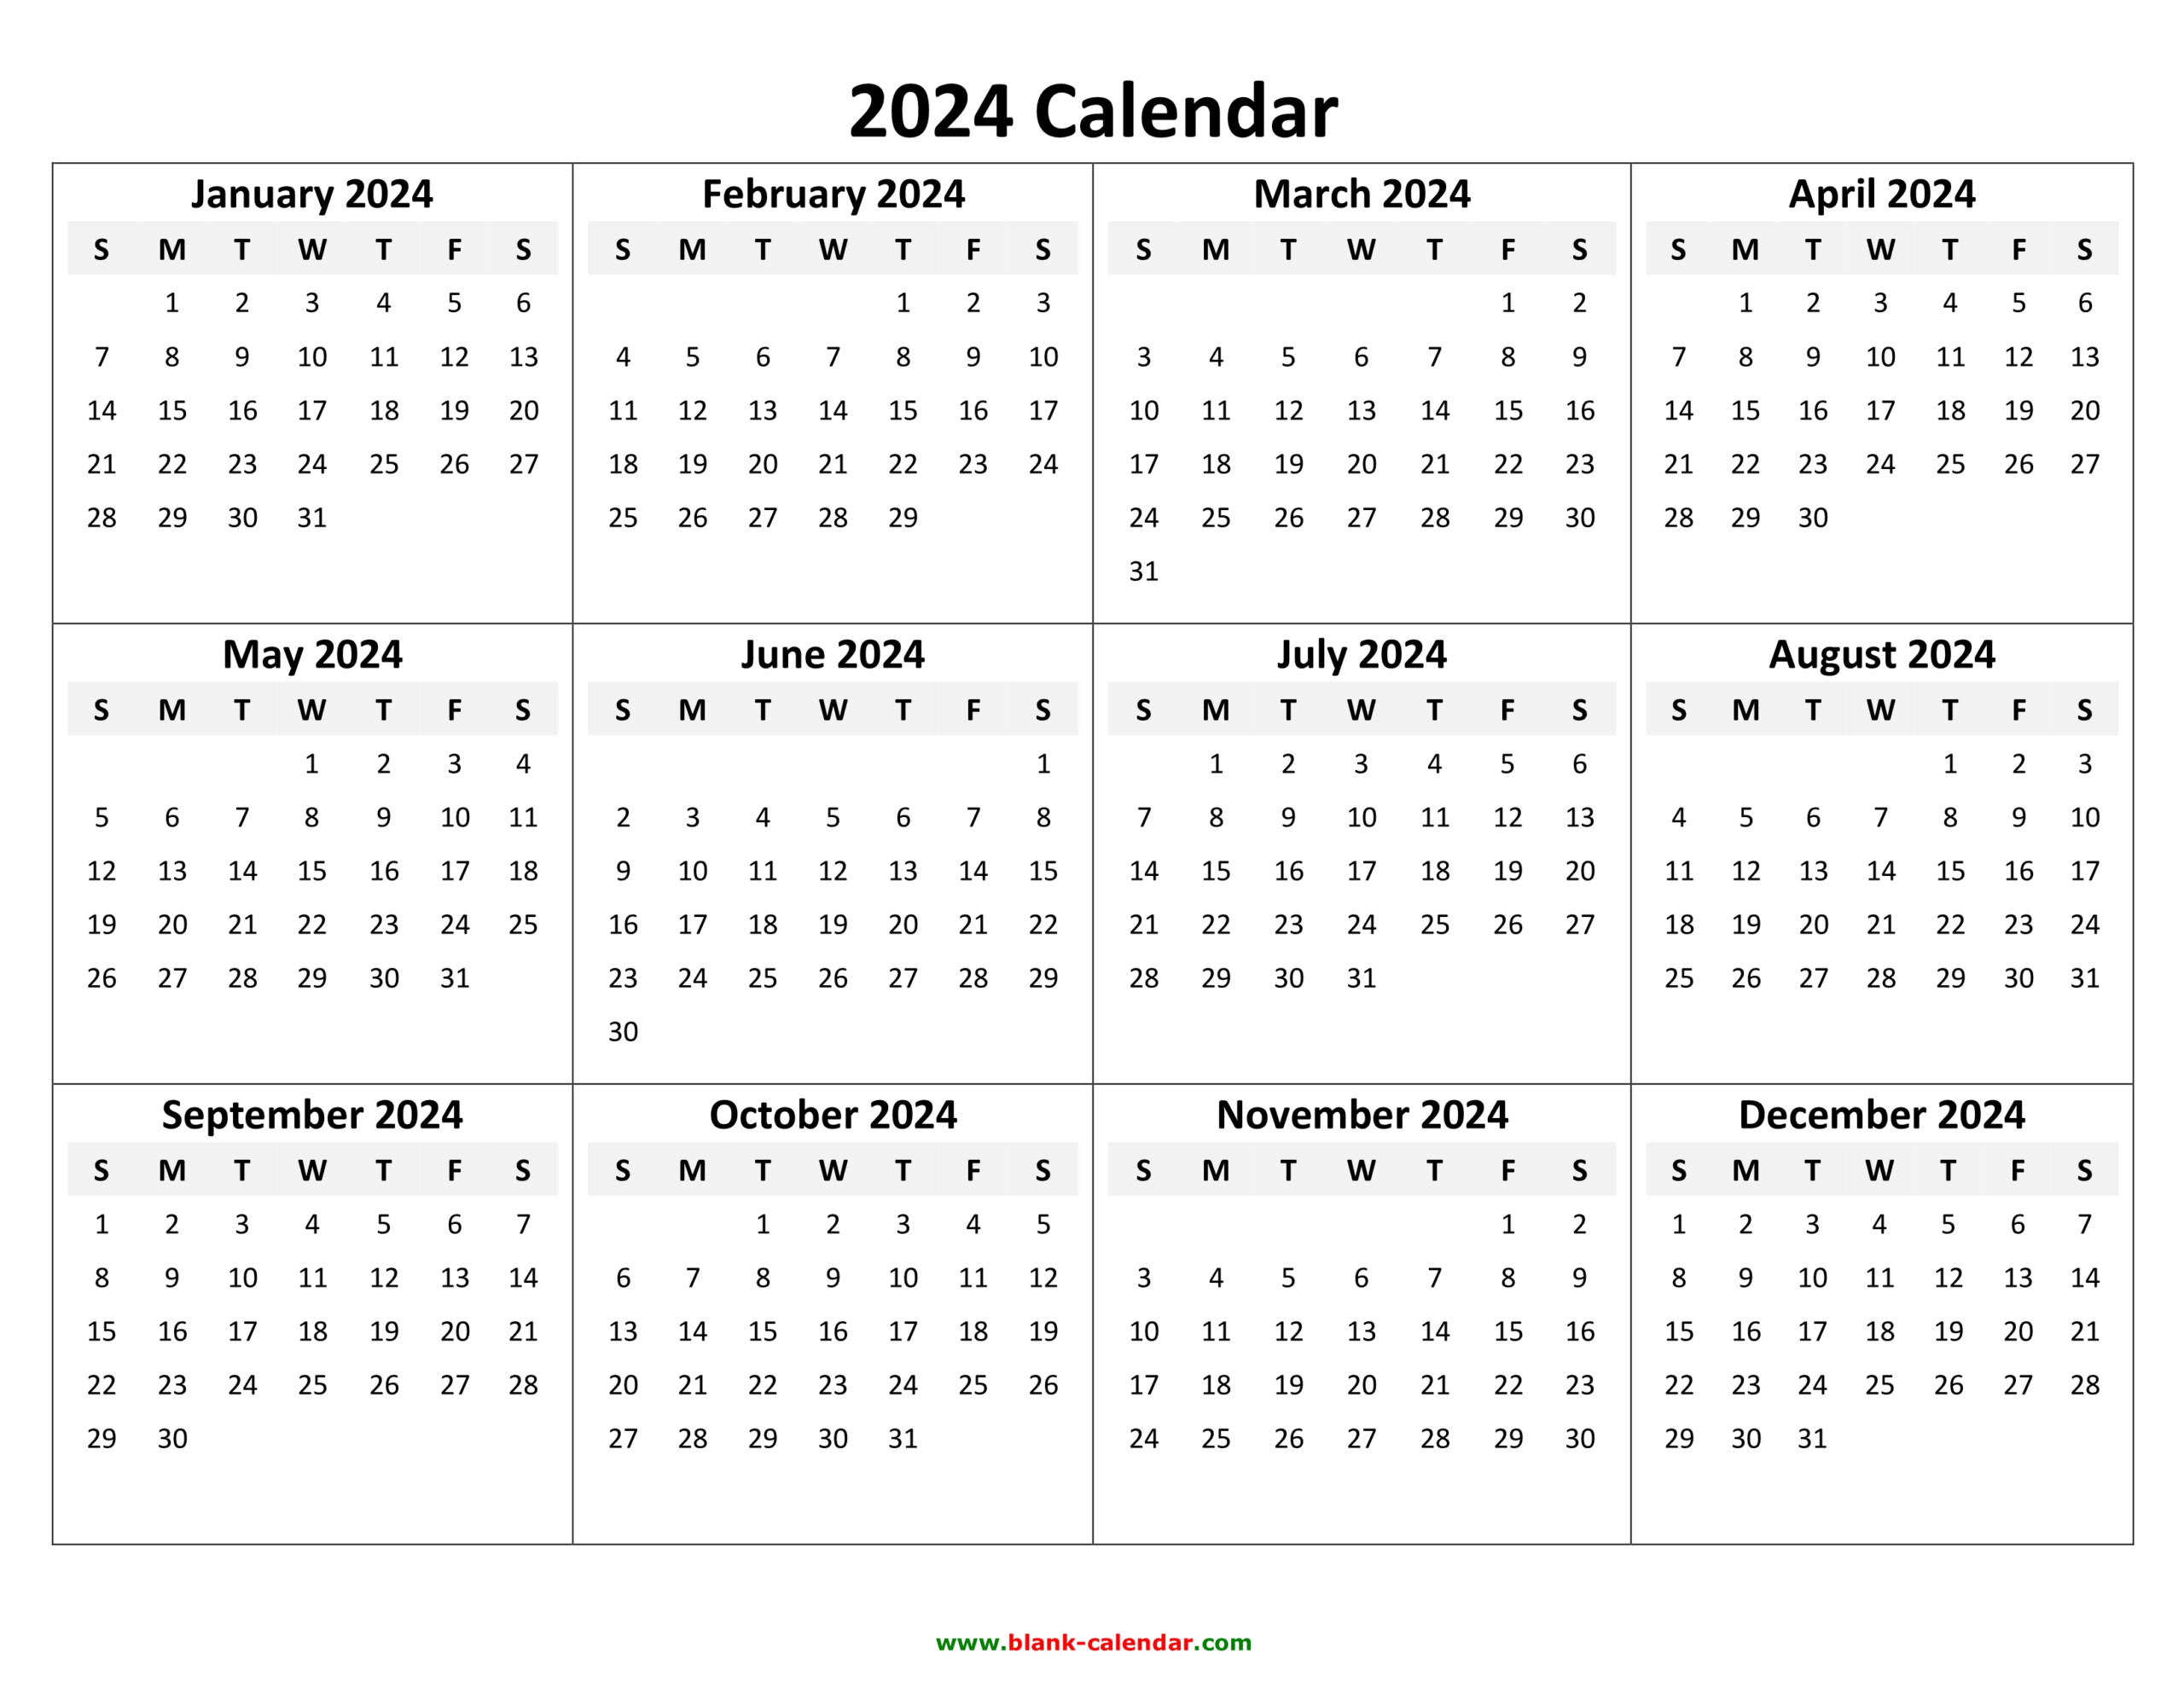 free-2024-calendar-download-2024-calendar-printable